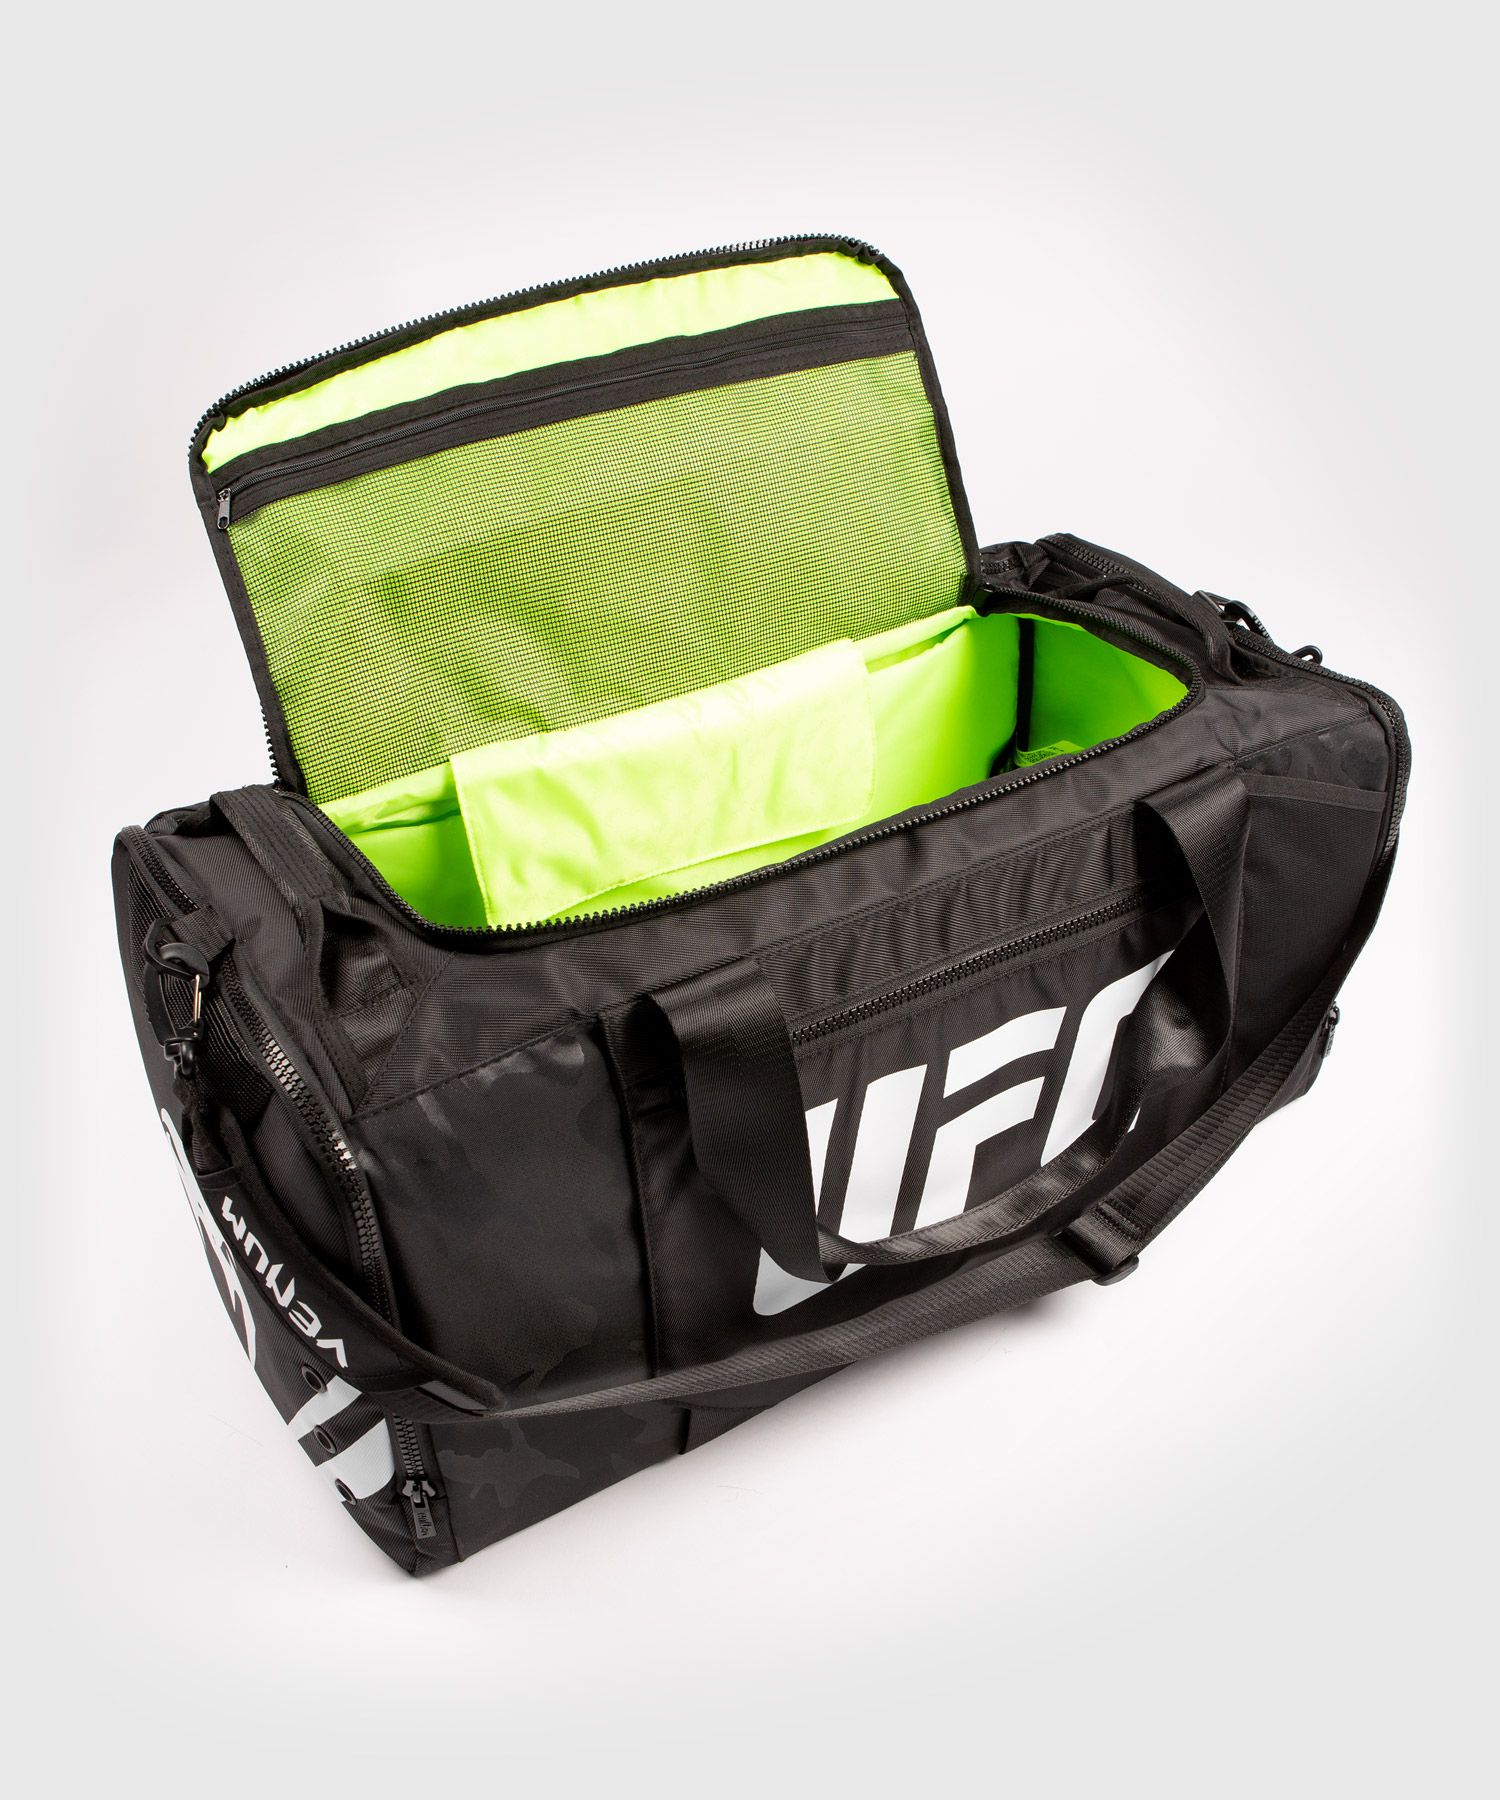 VENUM UFC Authentic fight week bag 